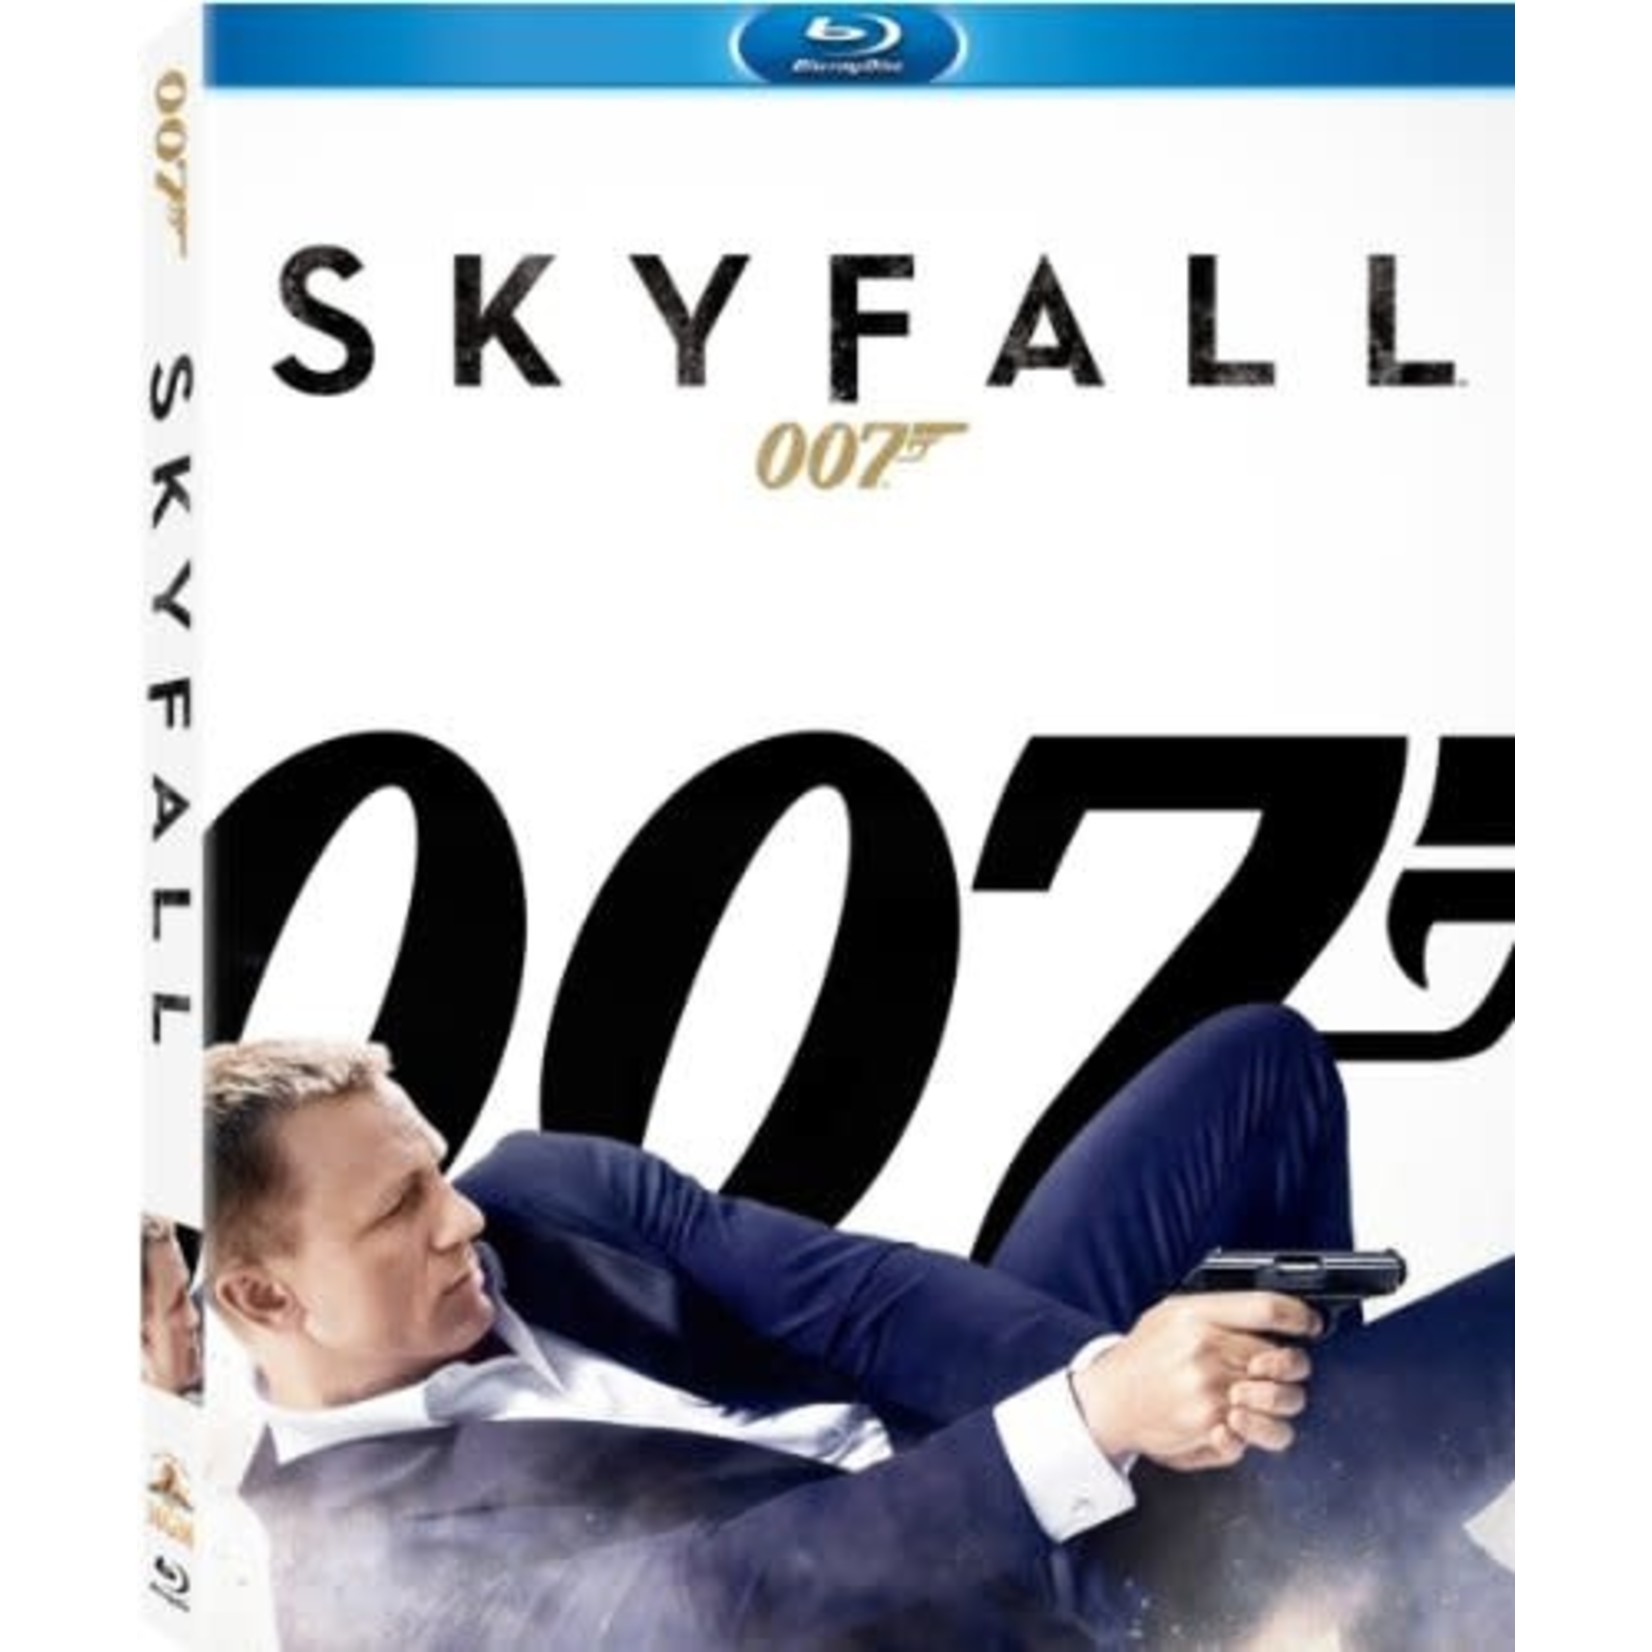 James Bond 007 - Skyfall (2012) [USED BRD/DVD]